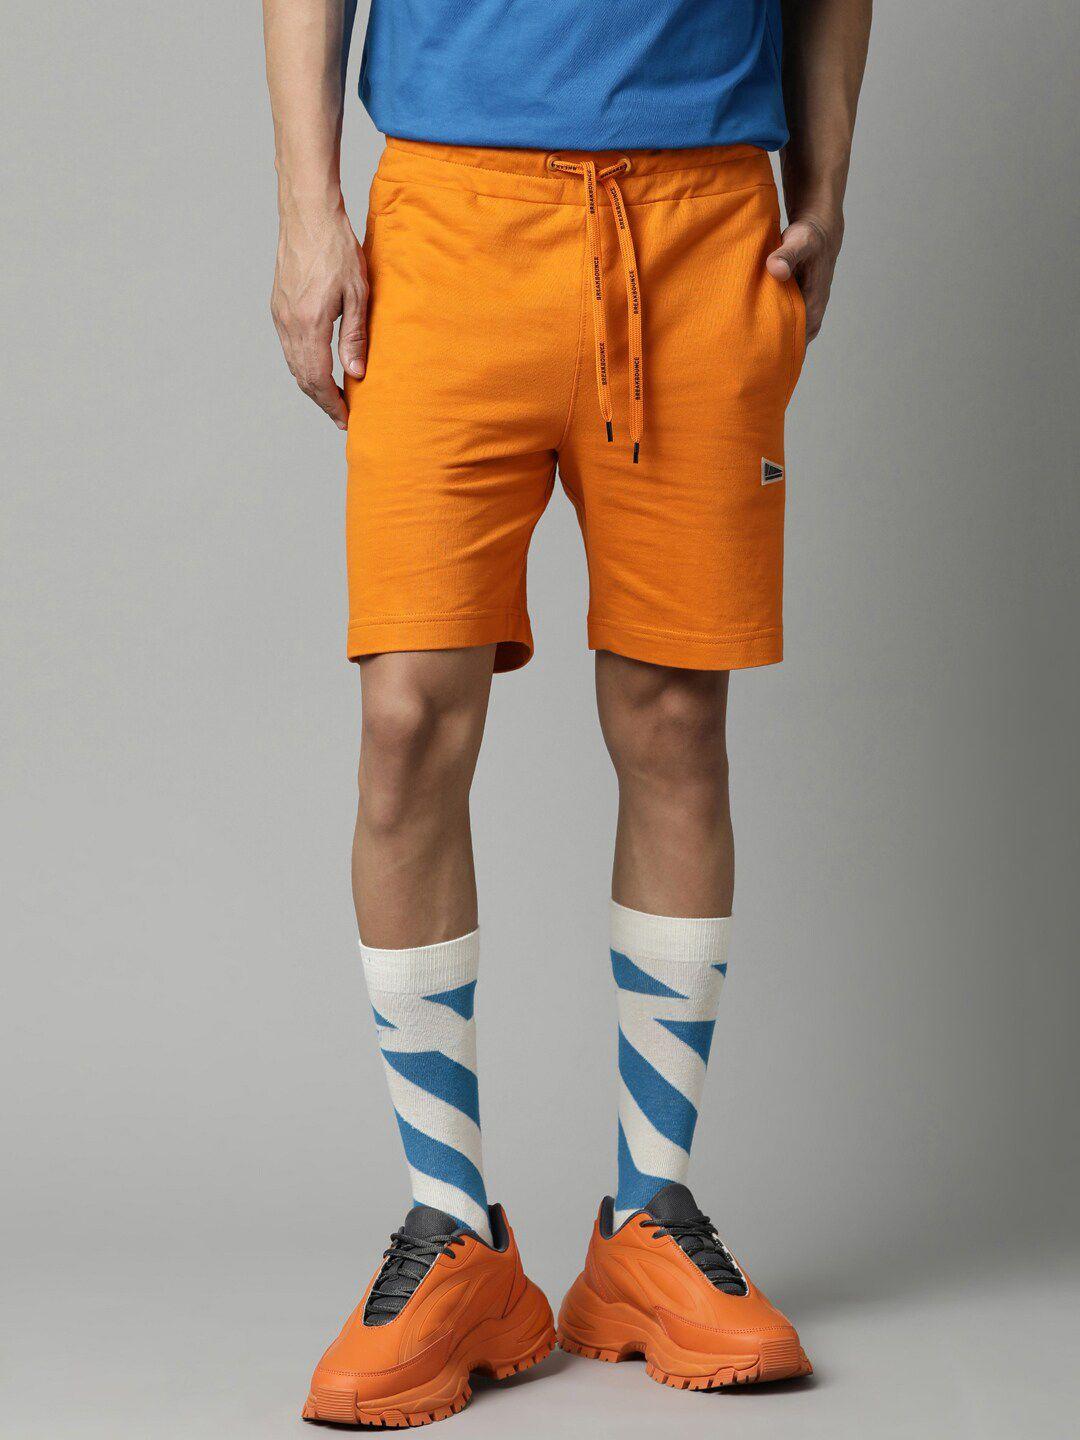 breakbounce-men-cotton-orange-shorts